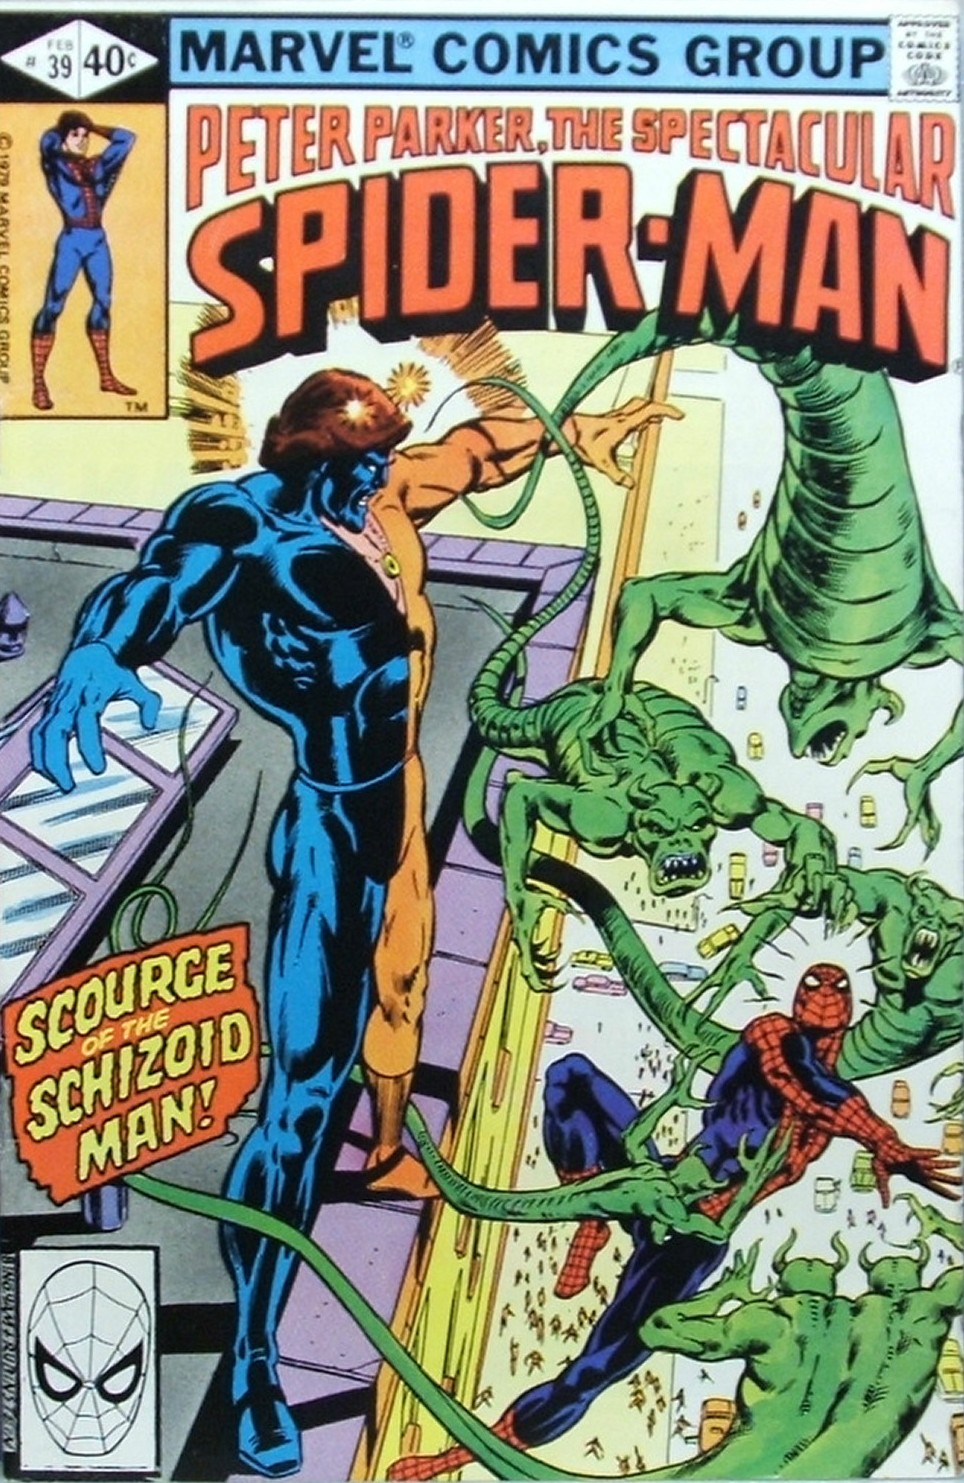 Peter Parker: The Spectacular Spider-Man Vol. 1 #39